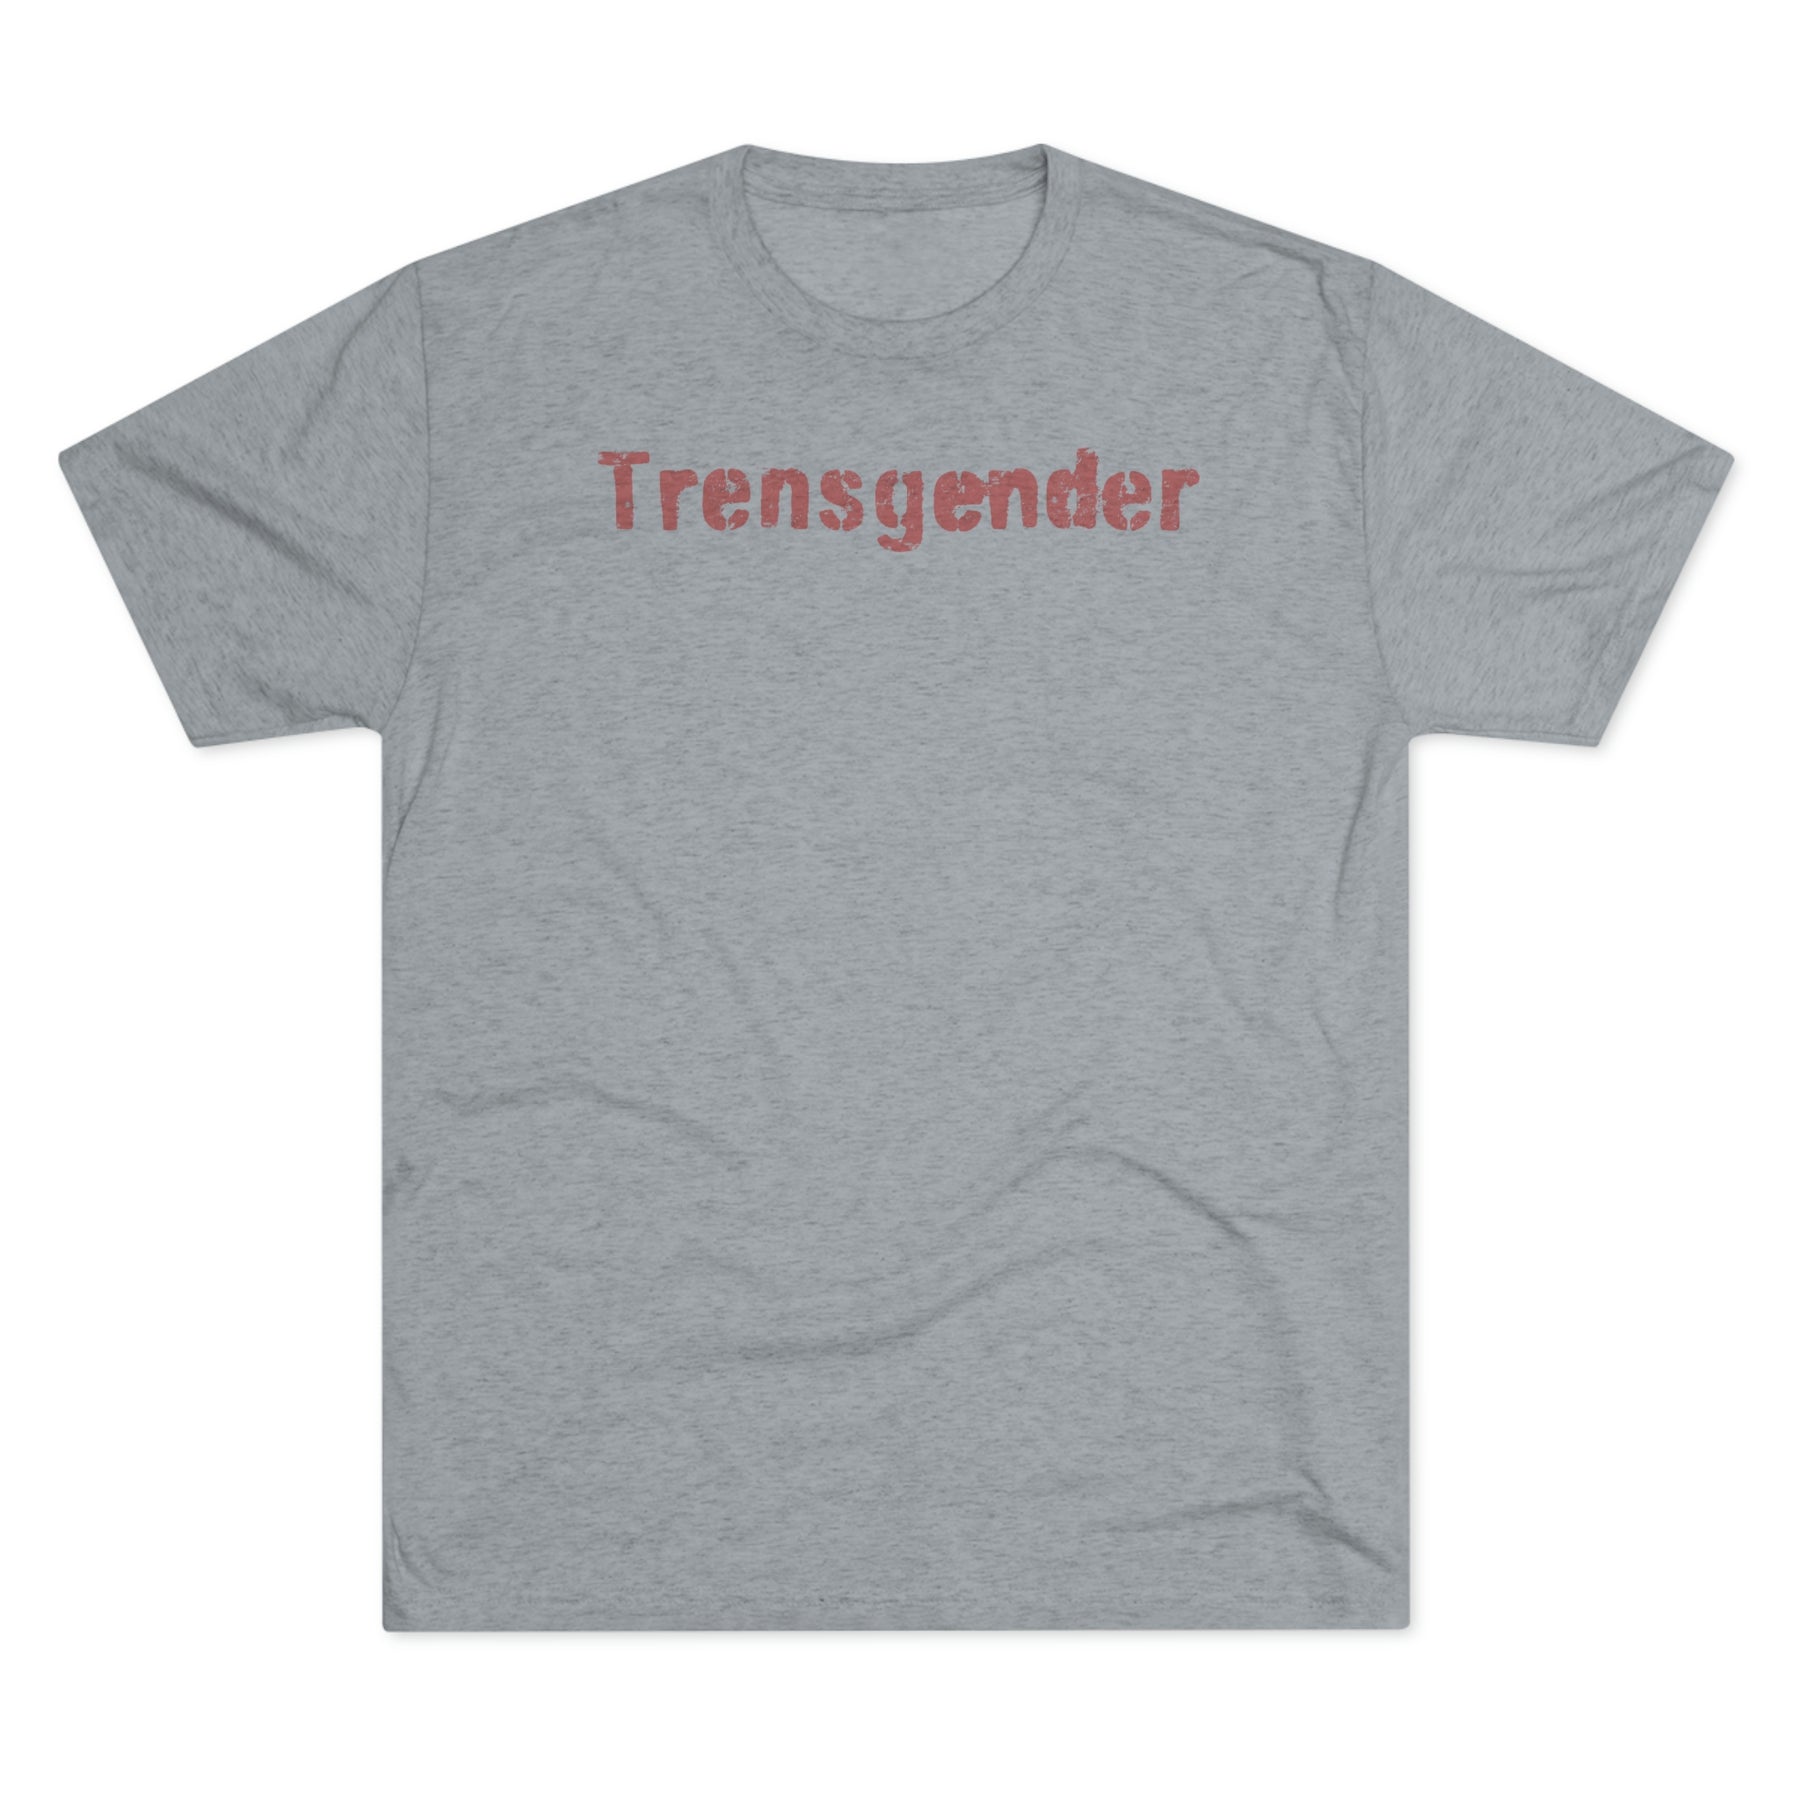 Trensgender – MikeOHearnLifestyle.com